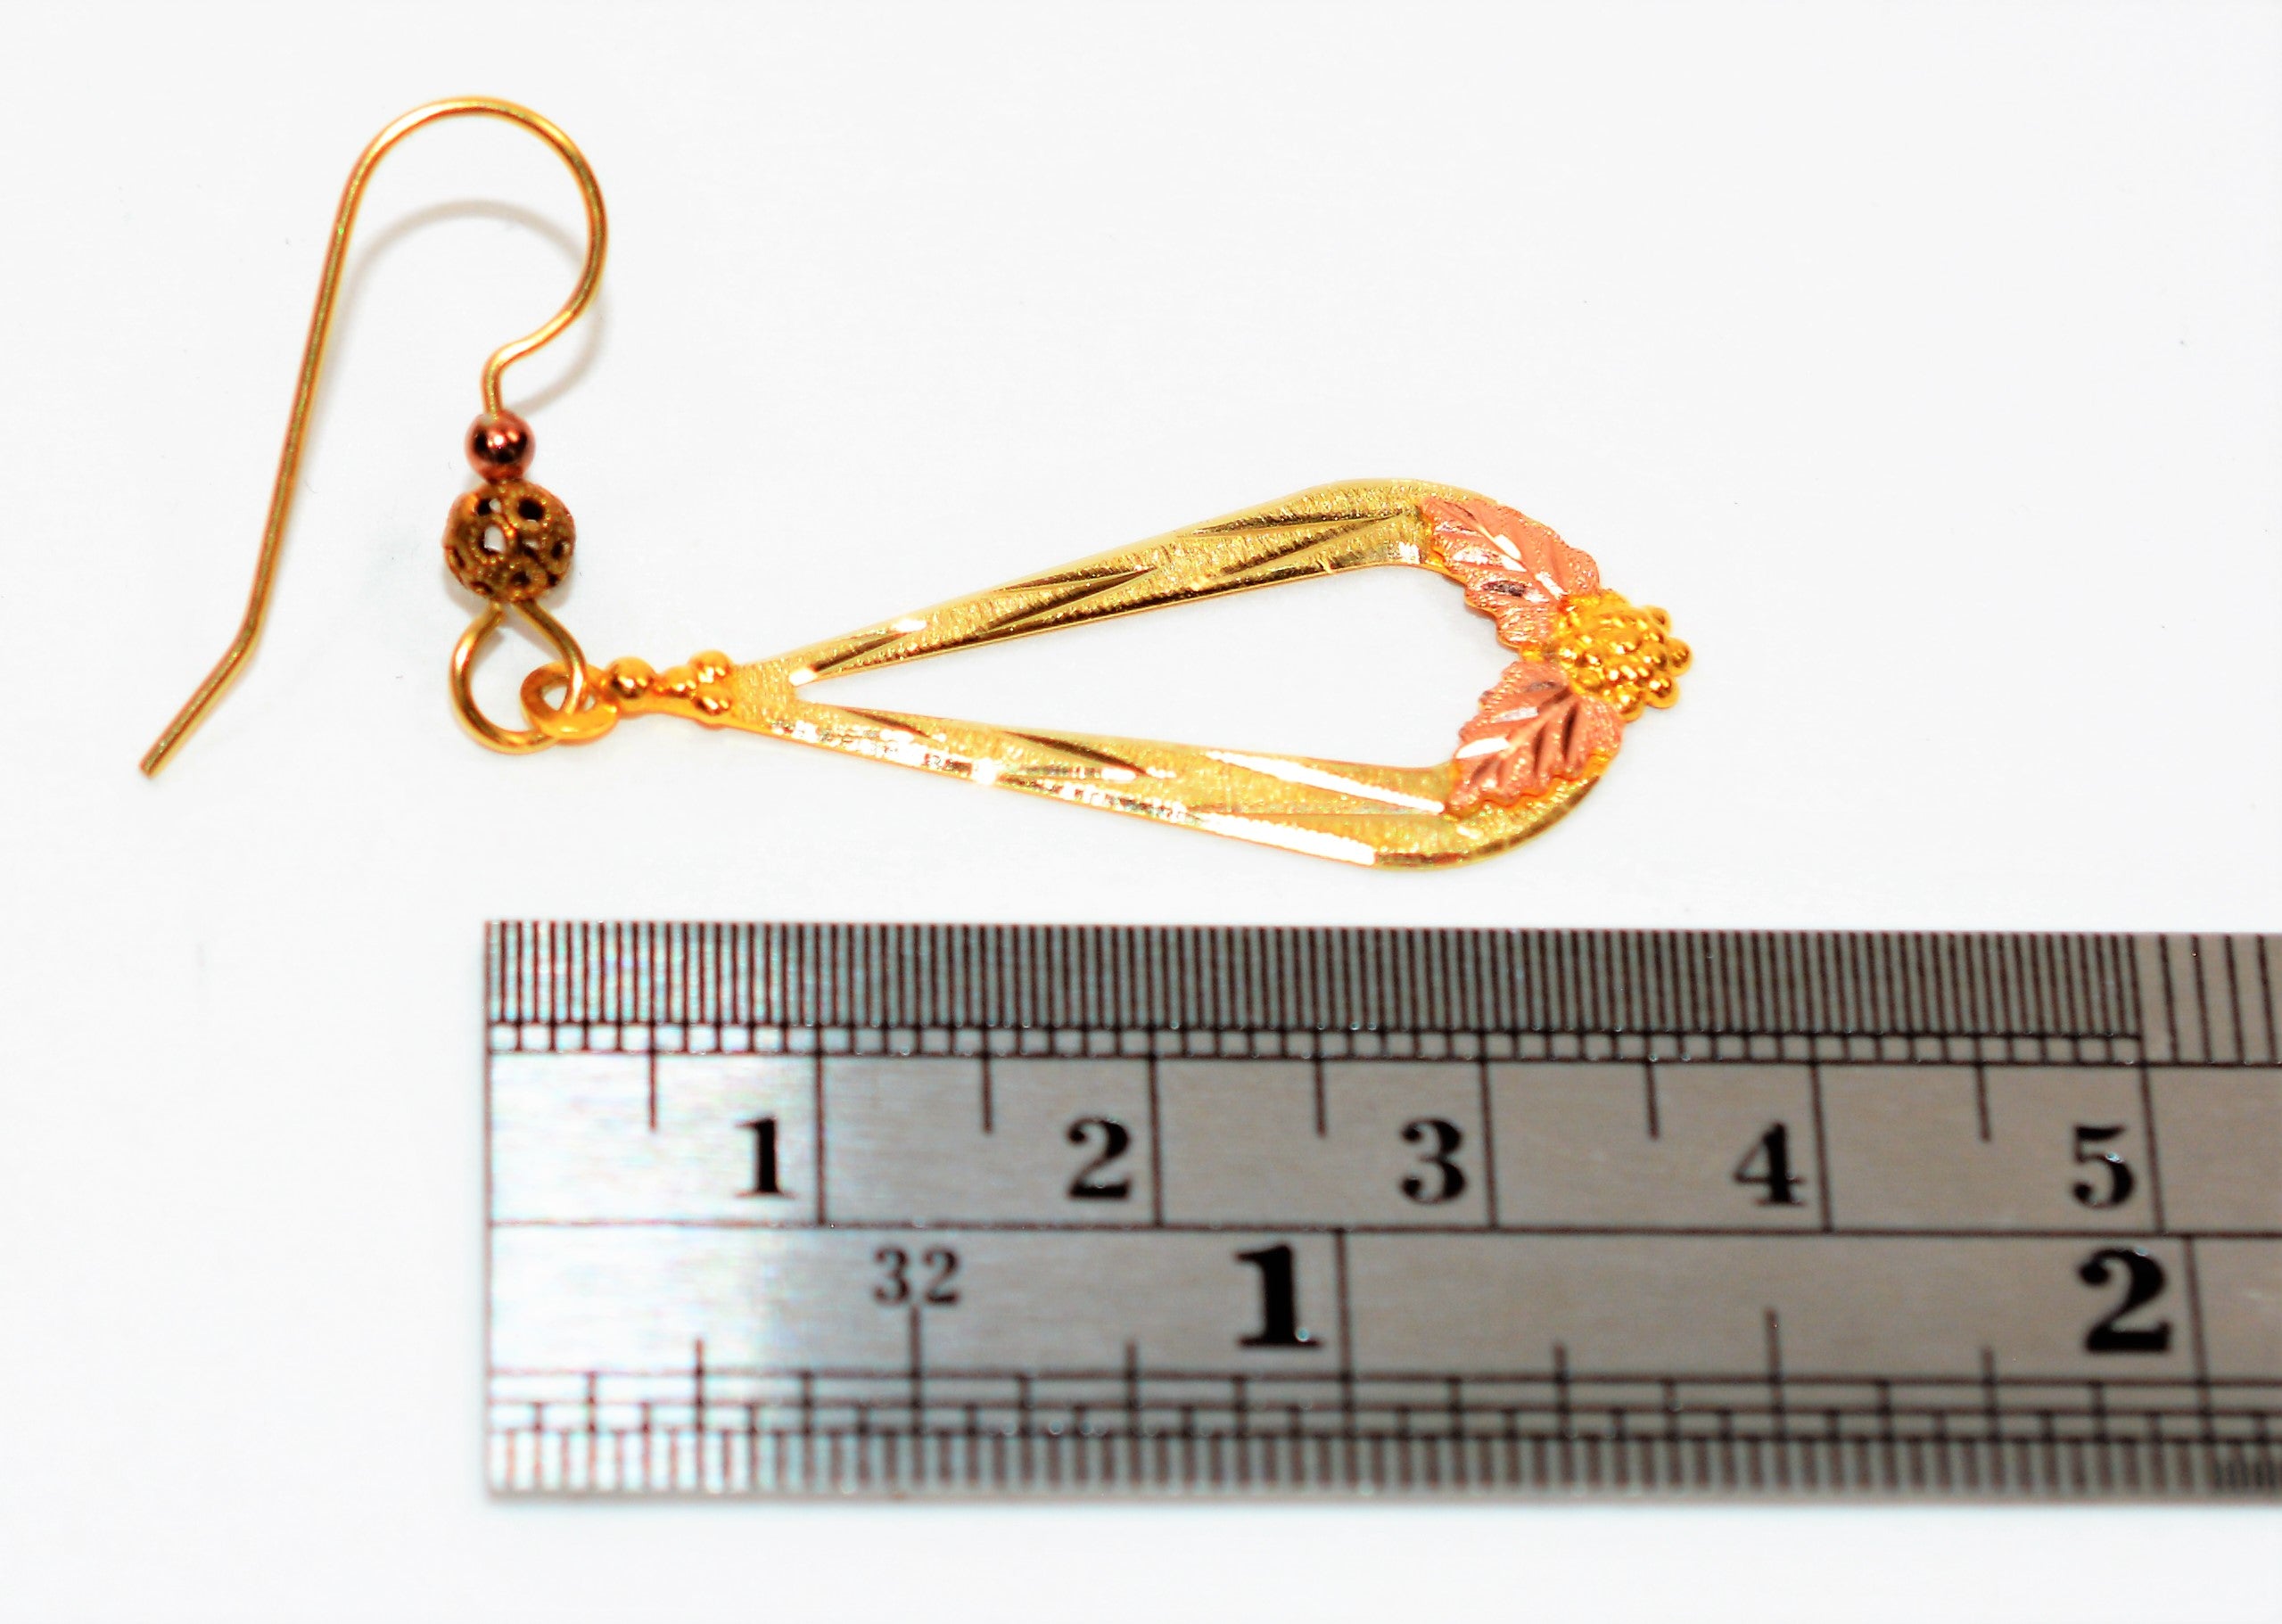 Black Hills Gold Earrings 10K Solid Gold Leaf Earrings Tri-Color Earrings South Dakota Earrings American Earrings Vintage Earrings Estate